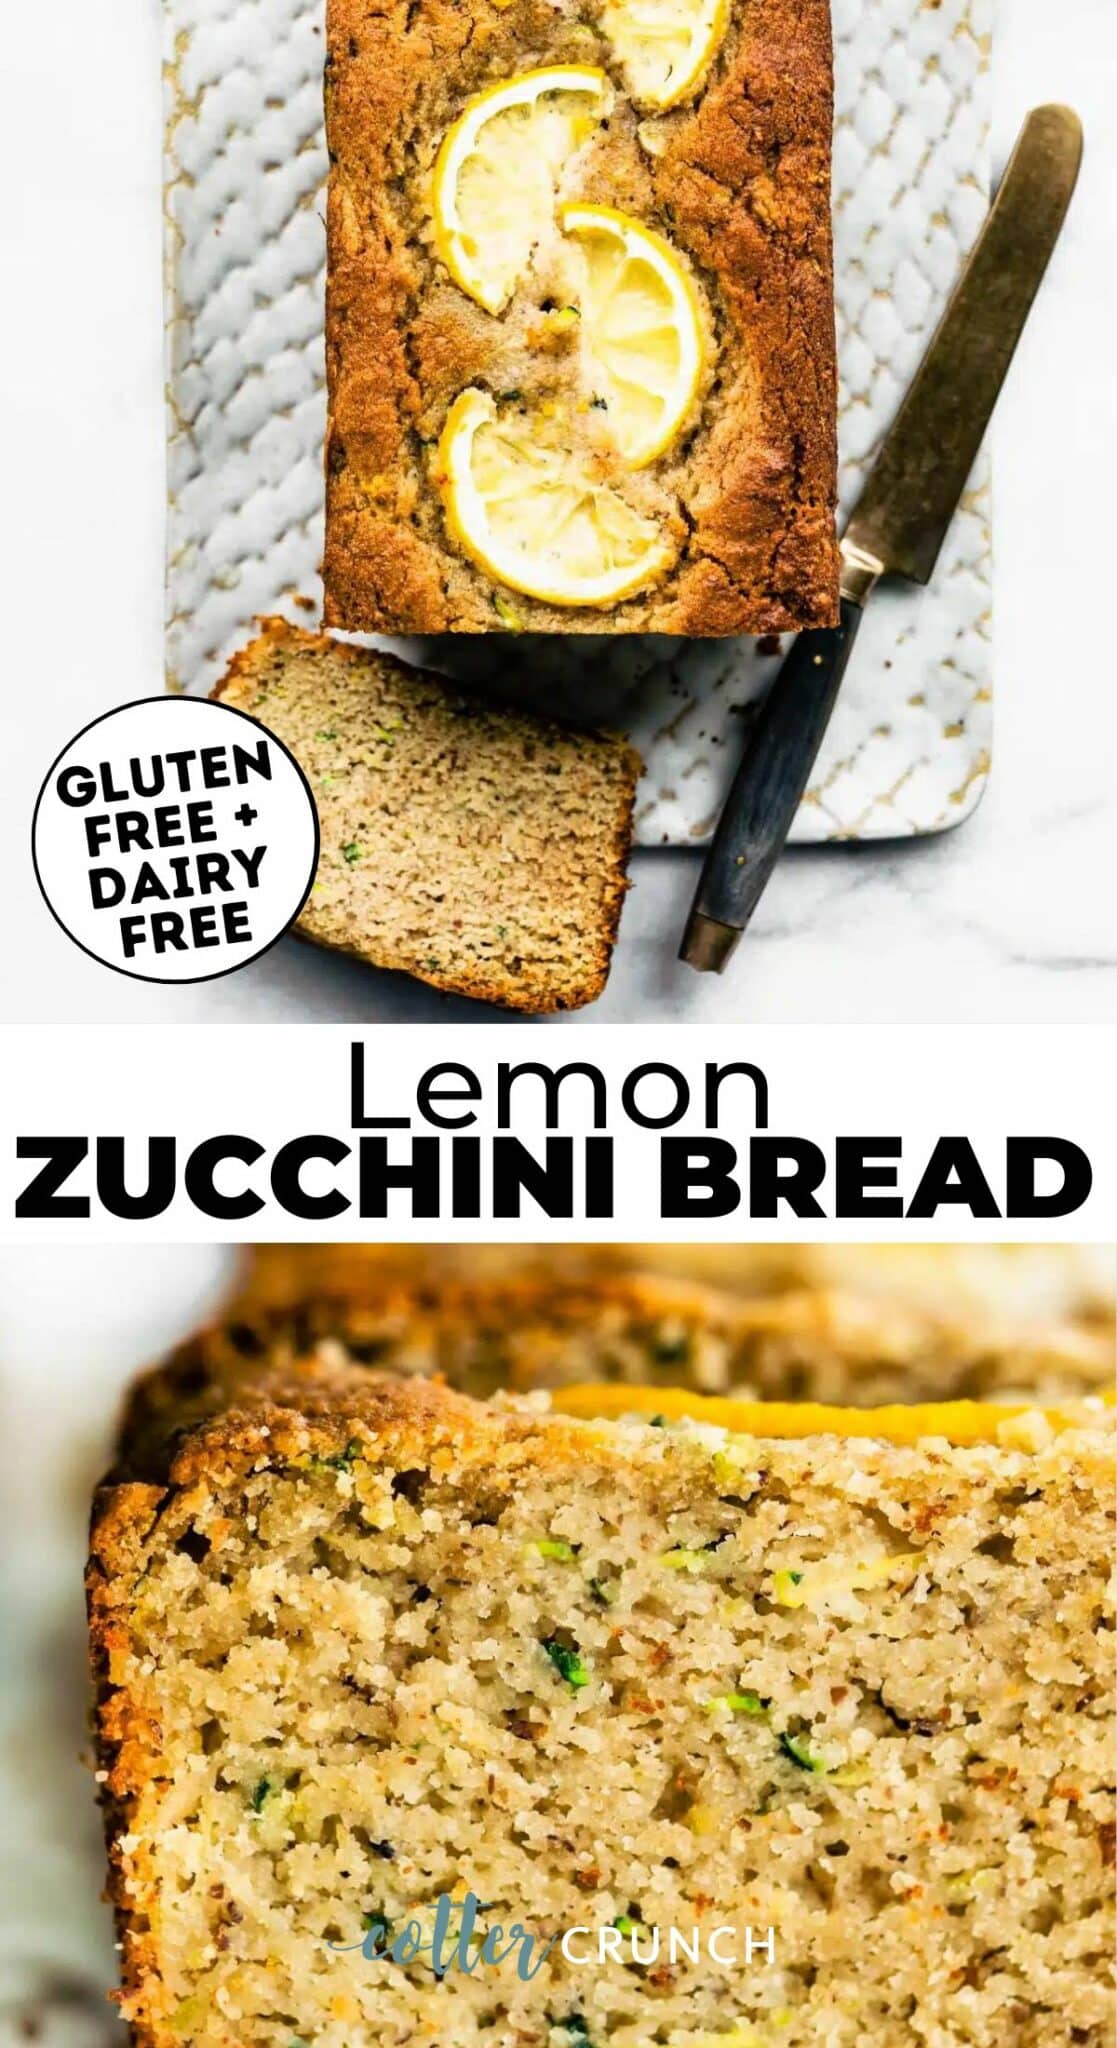 Lemon Zucchini Bread (Gluten-Free) - Cotter Crunch